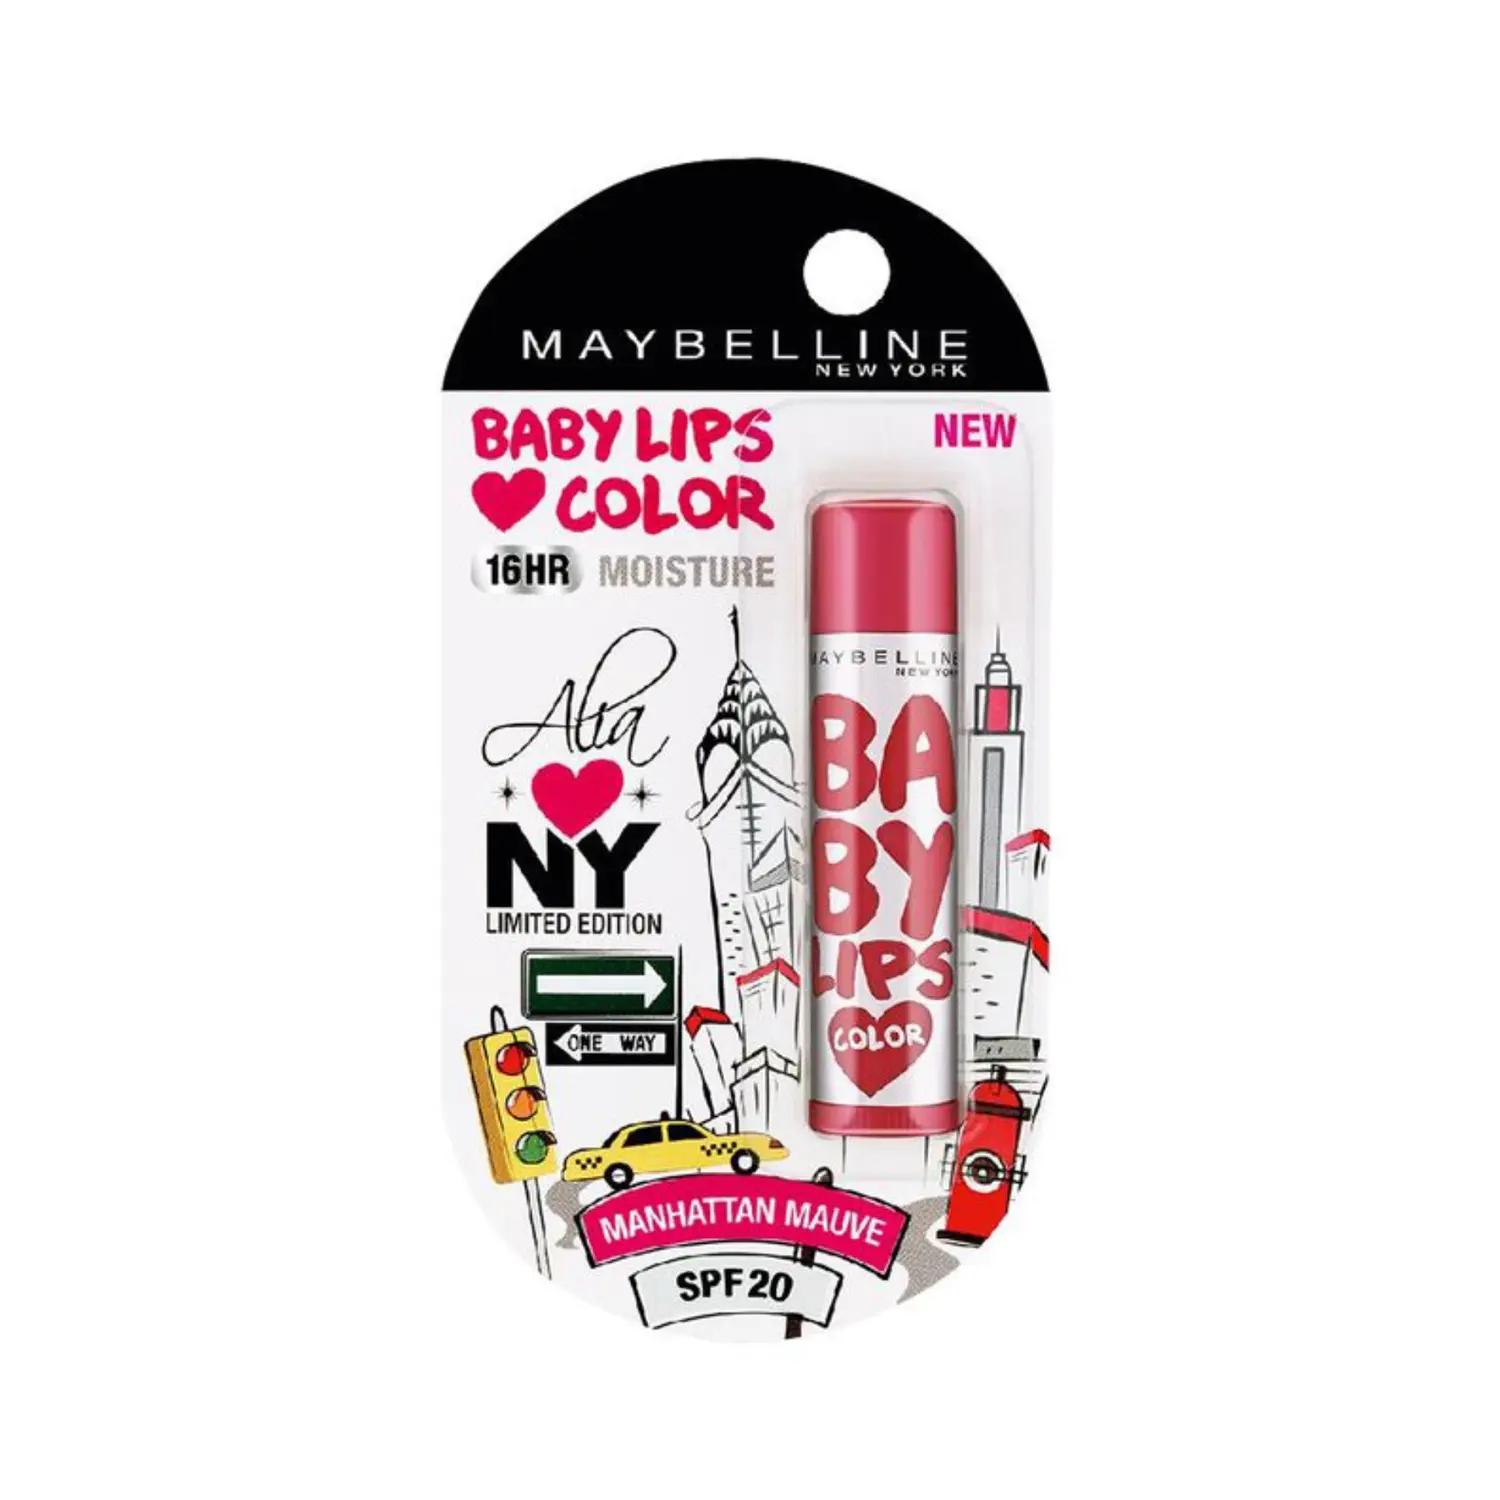 maybelline new york baby lips colour limited edition lip balm - manhattan mauve (4g)